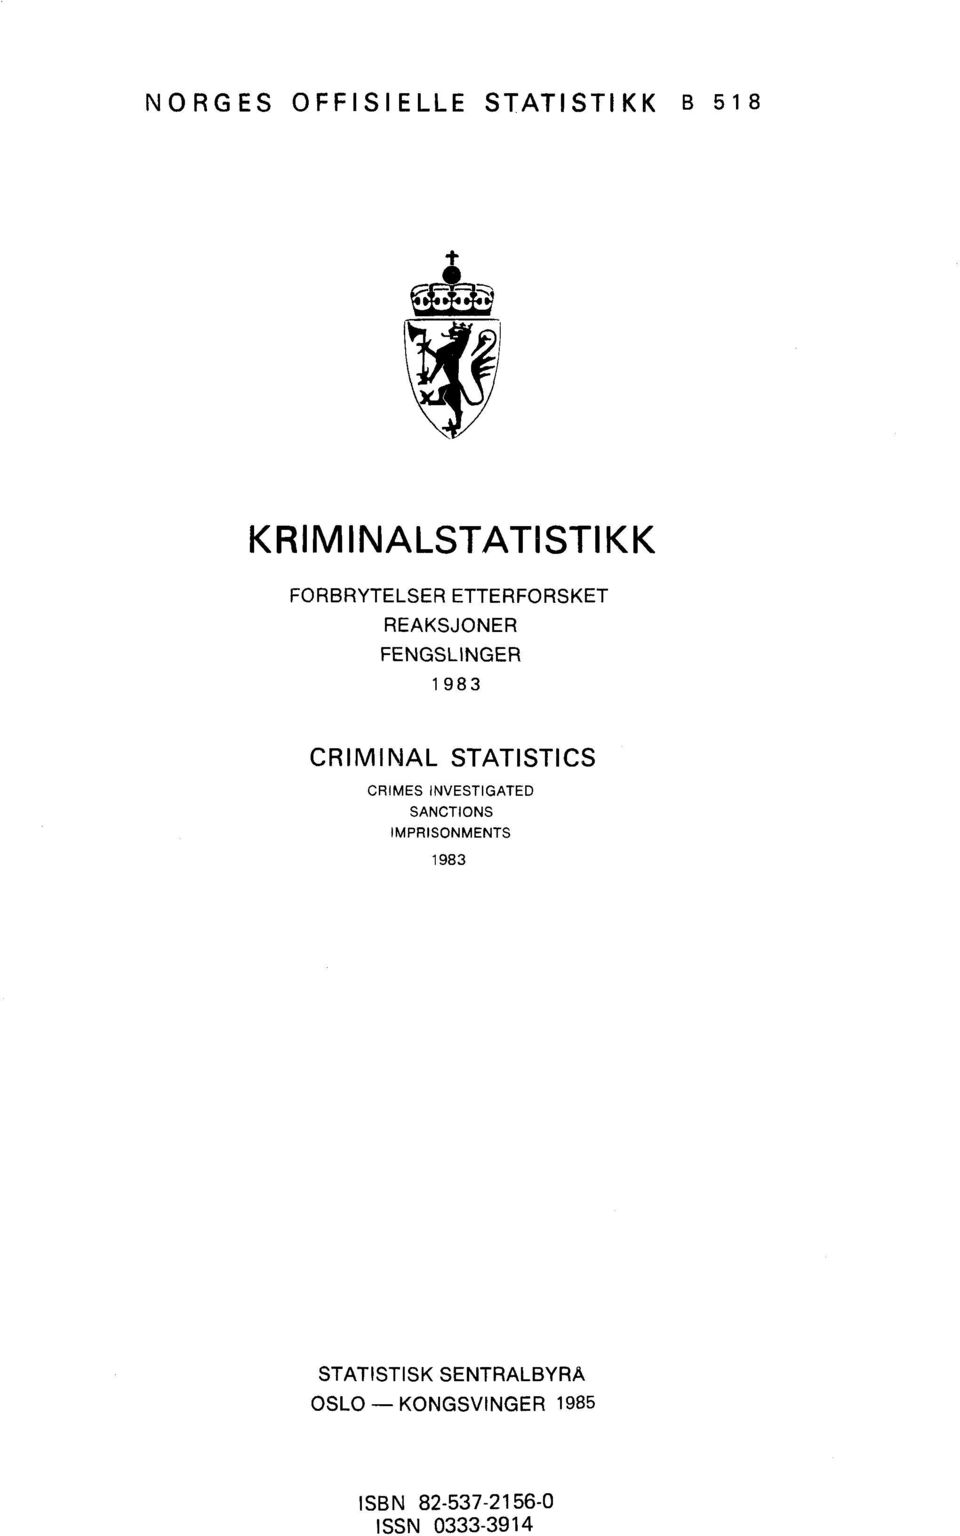 STATISTICS CRIMES INVESTIGATED SANCTIONS IMPRISONMENTS 1983